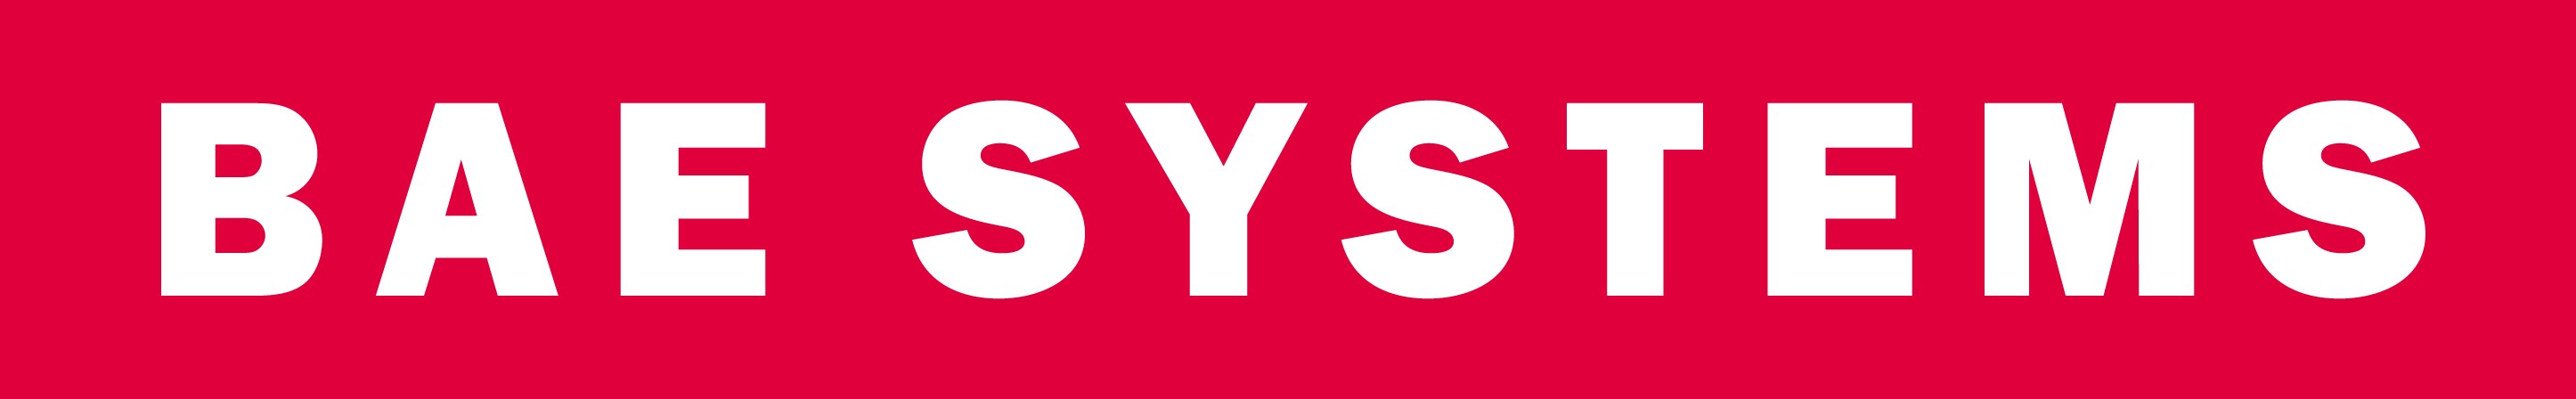 BAE Systems Brand Logo